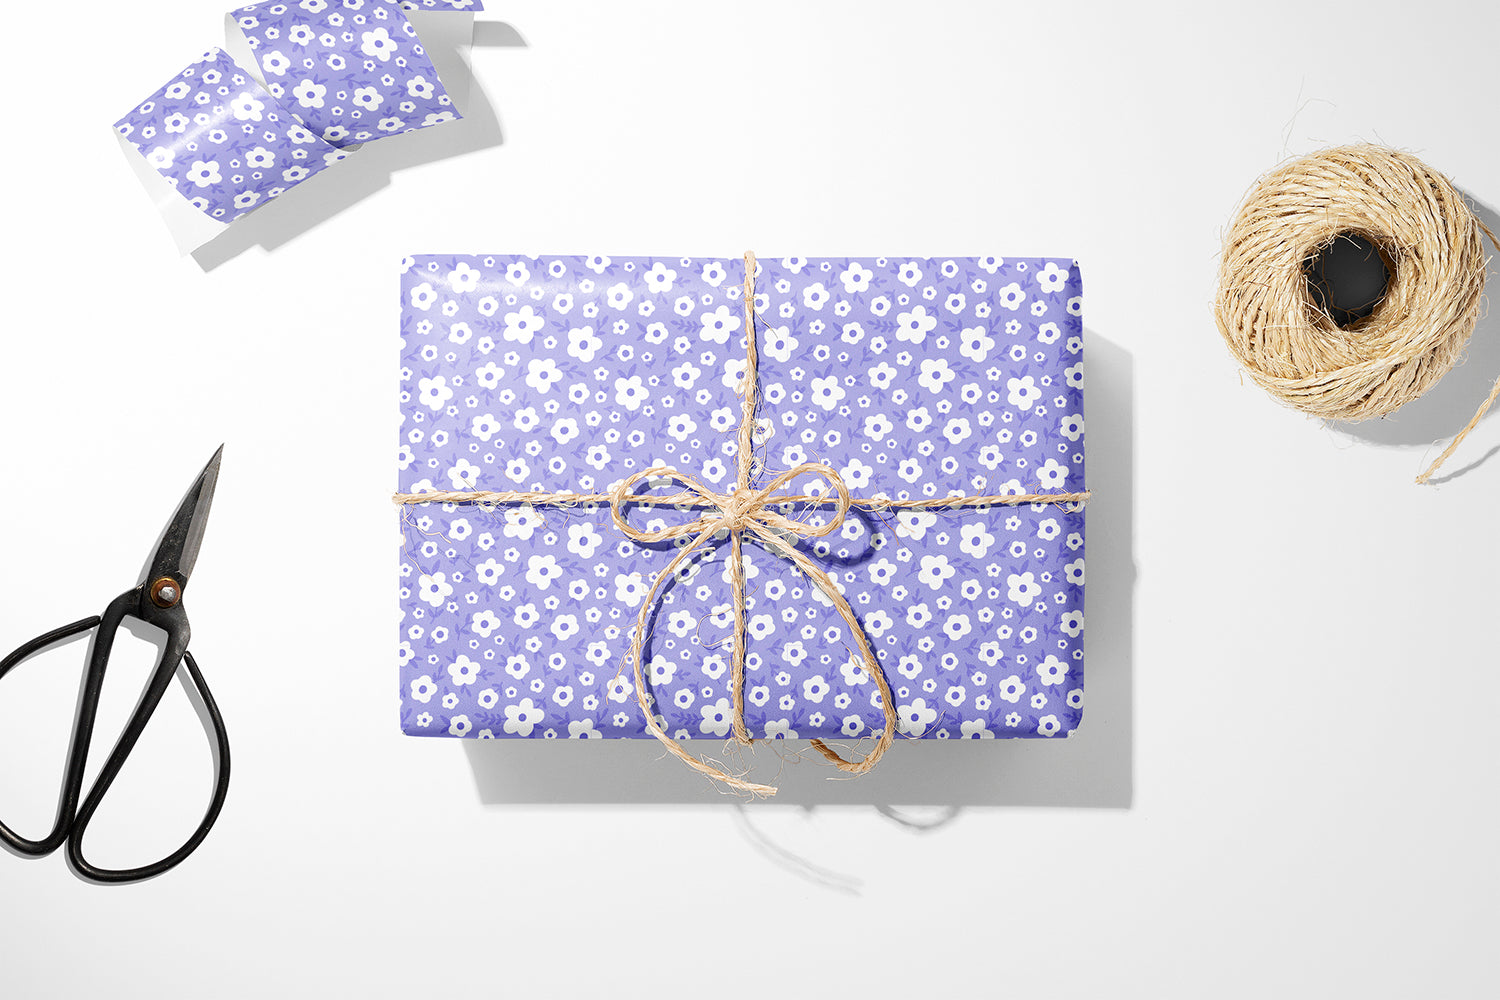 Lavender Cartoon Flower Flat Wrapping Paper Sheet Wholesale Wraphaholic